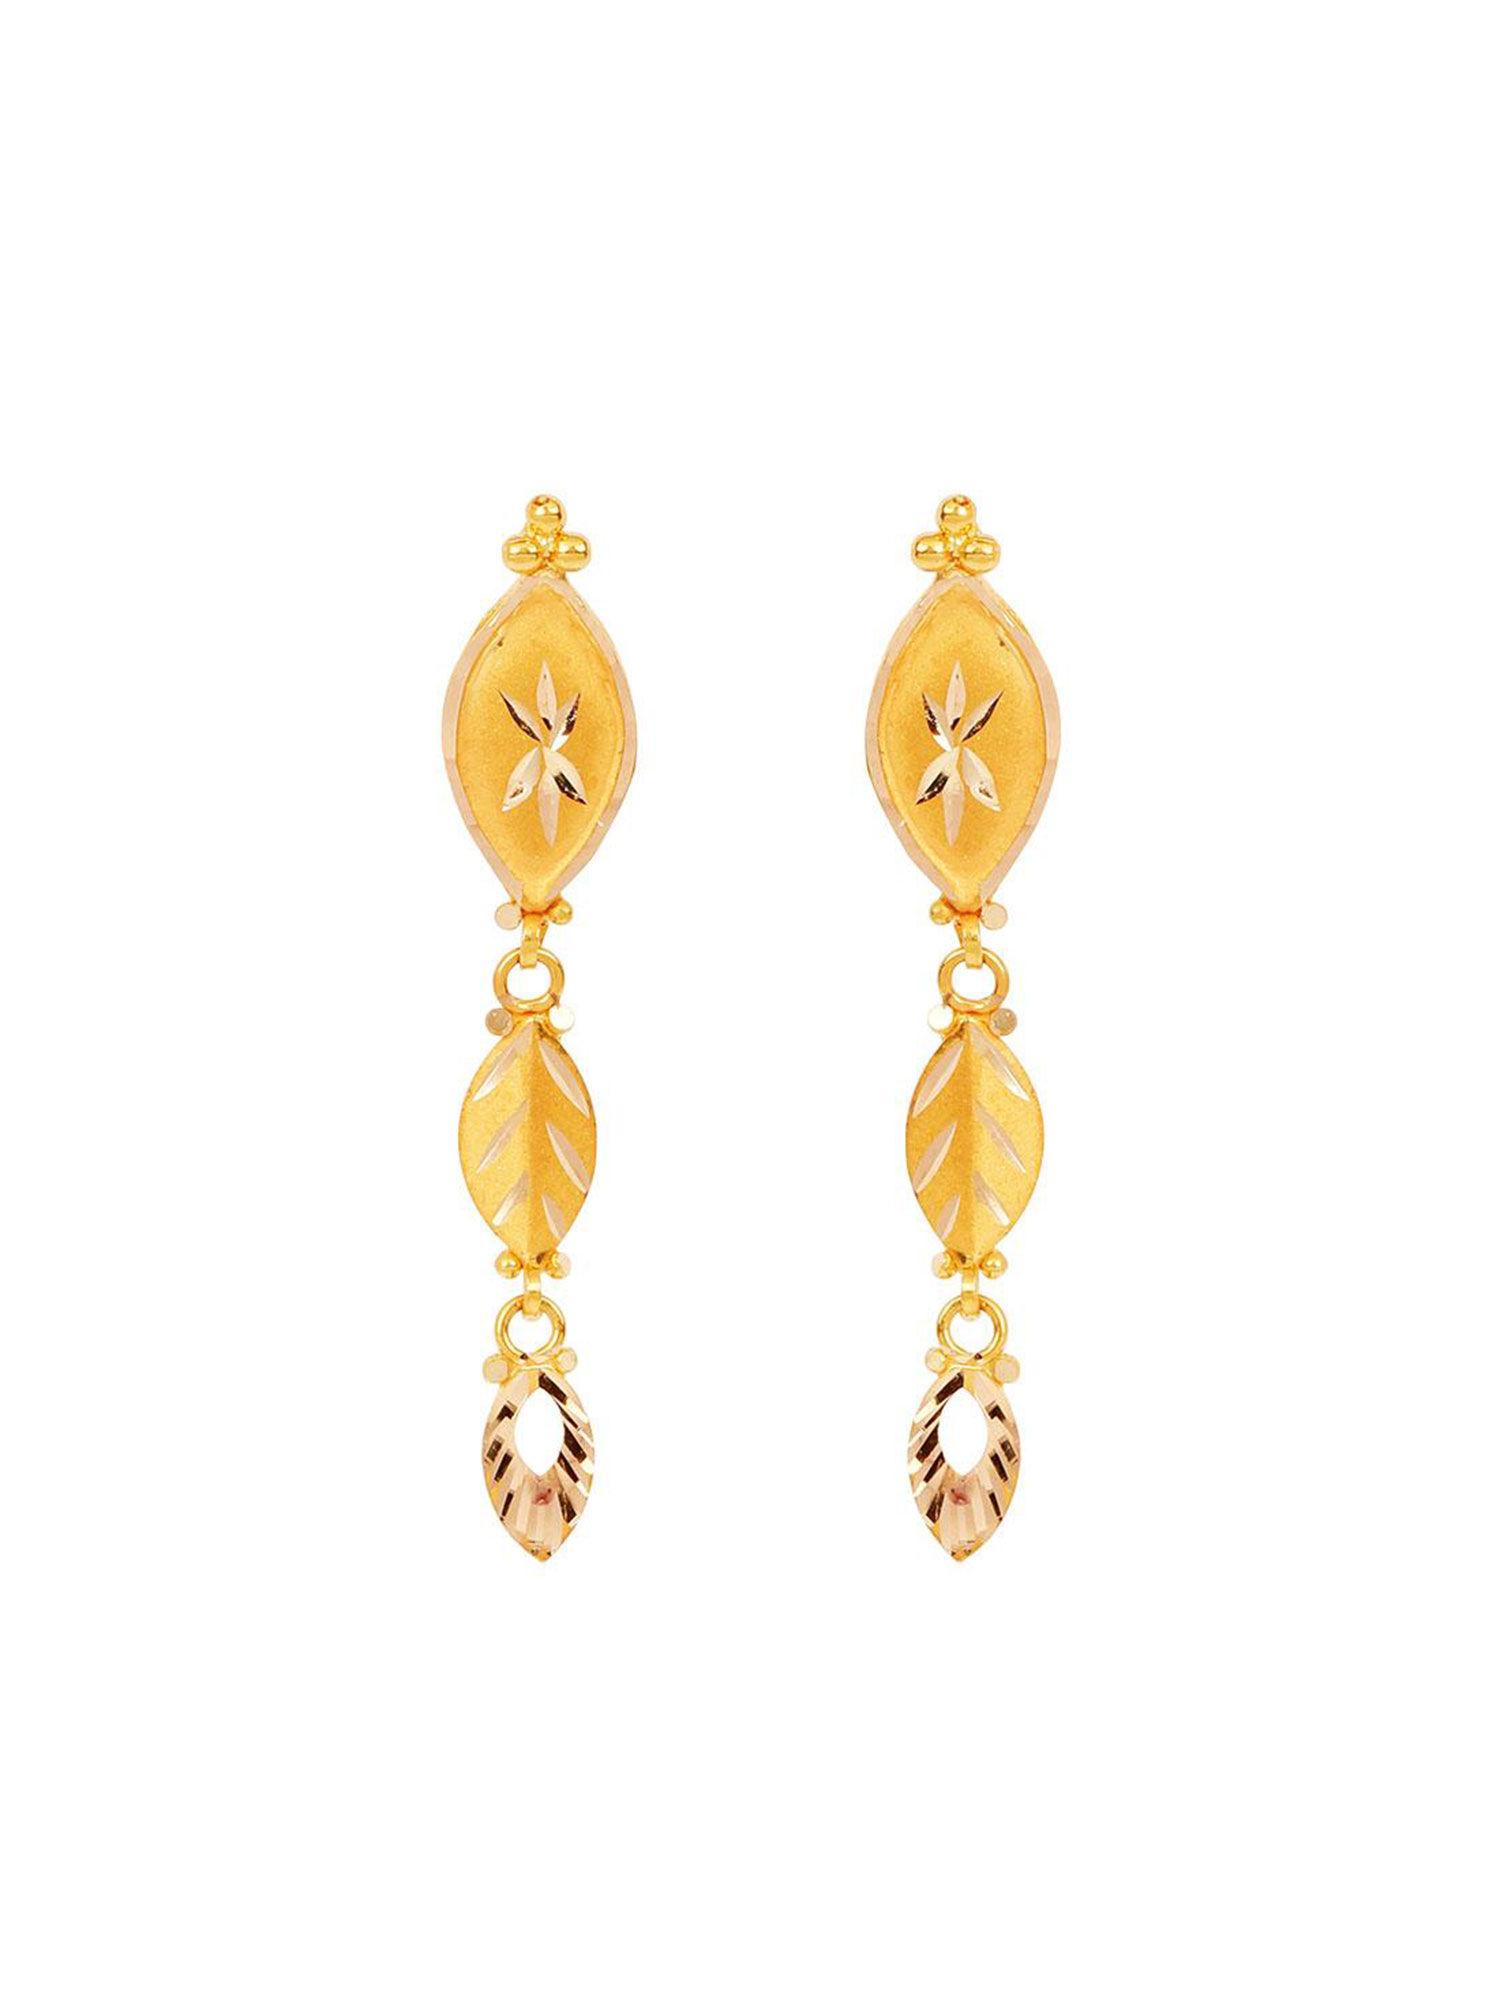 18k yellow gold lightweight dangle earring (one size)